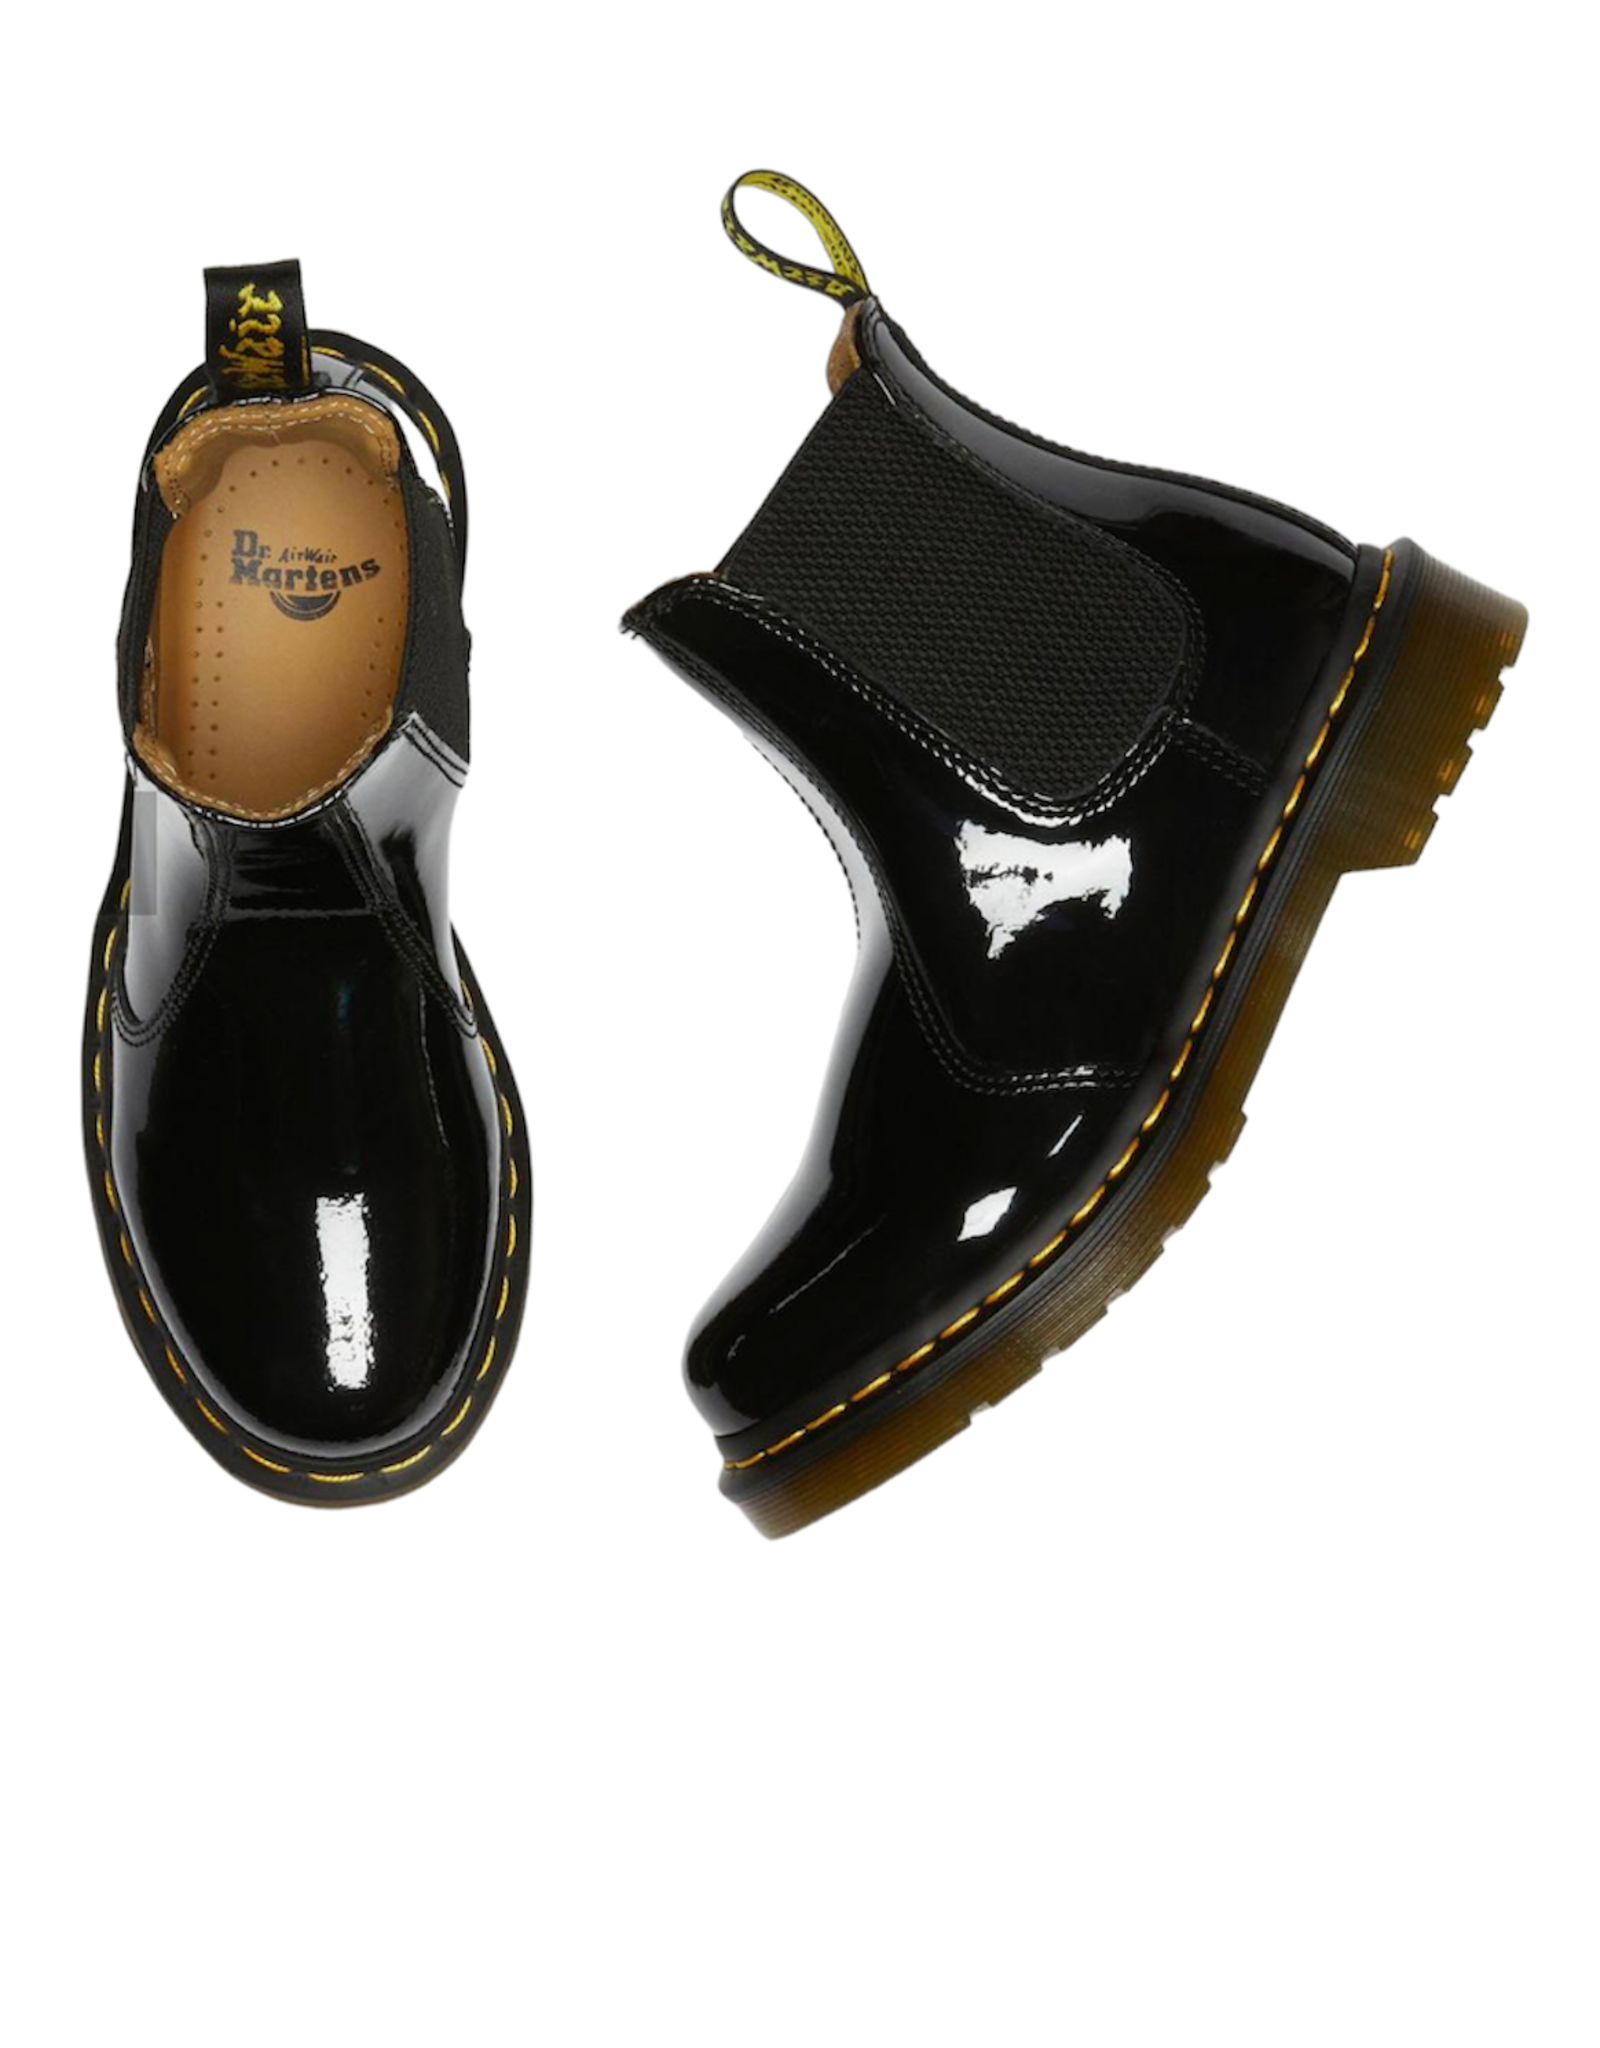 Dr Martens 2976 black patent lamper chelsea boot